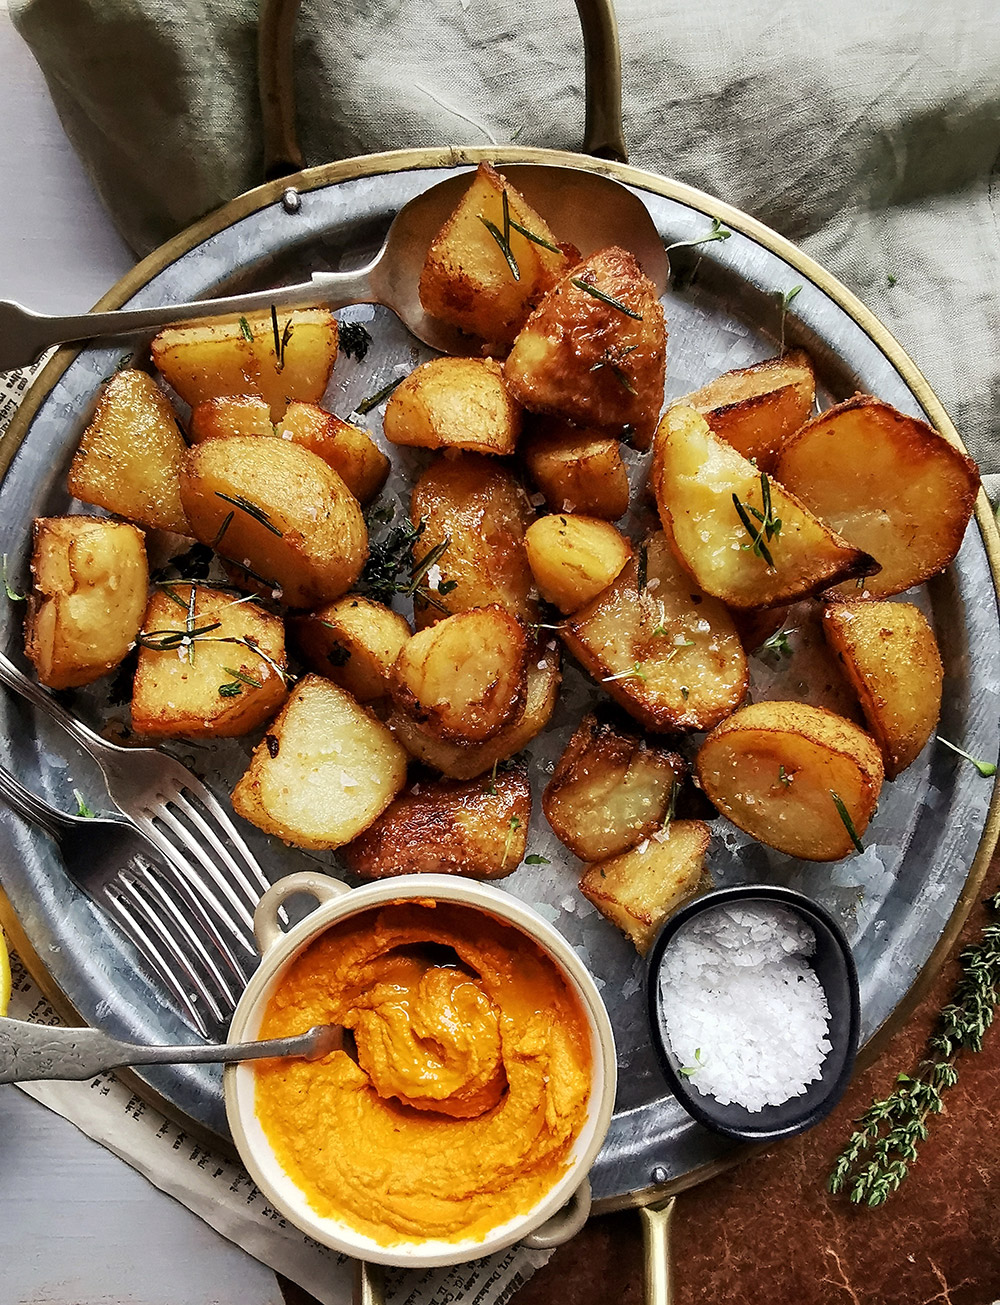 Heavenly roasted potatoes